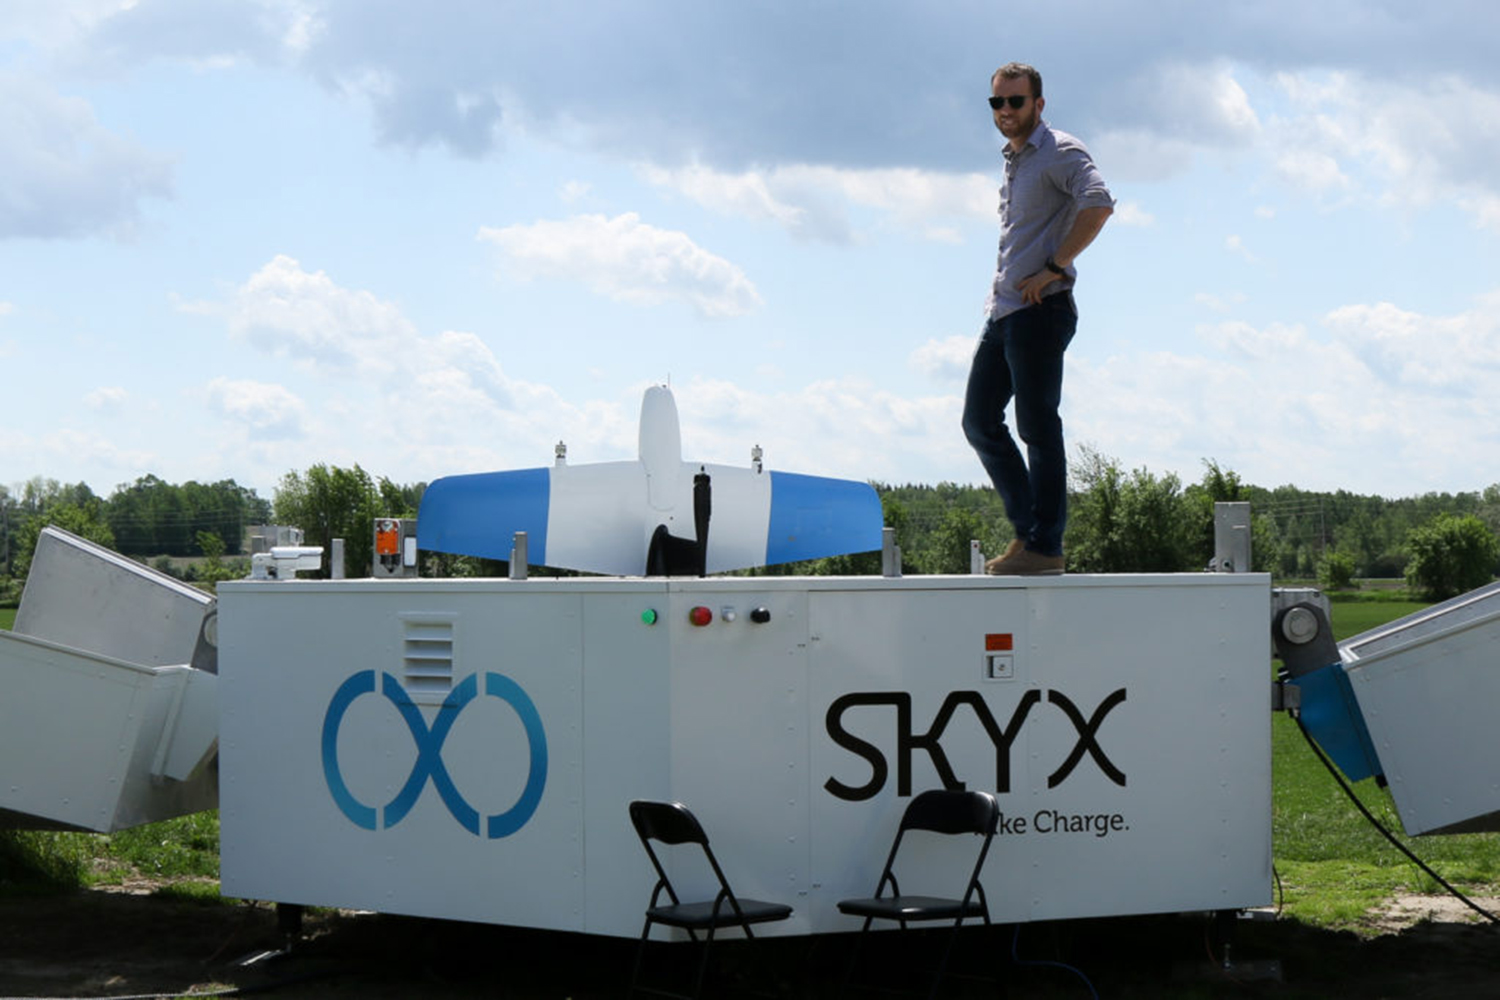 xstation drone charing skyone skyx6